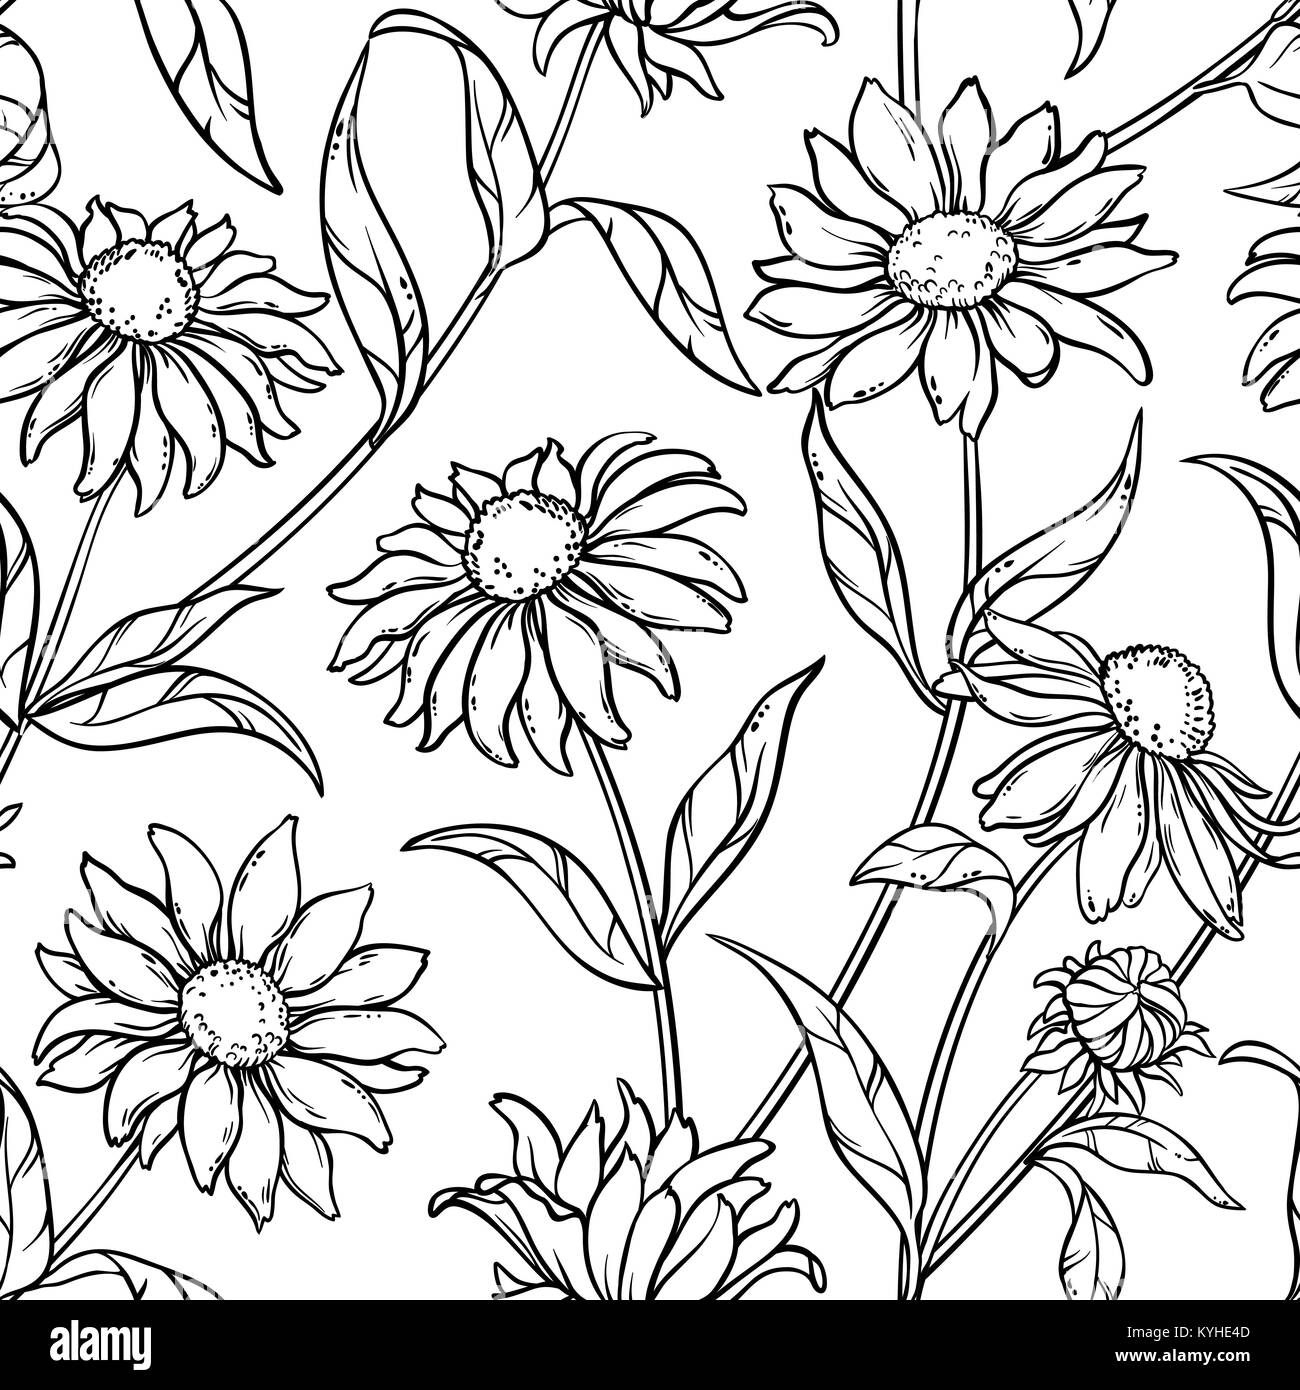 Echinacea Pflanze vseamless Muster auf weißem Hintergrund Stock Vektor